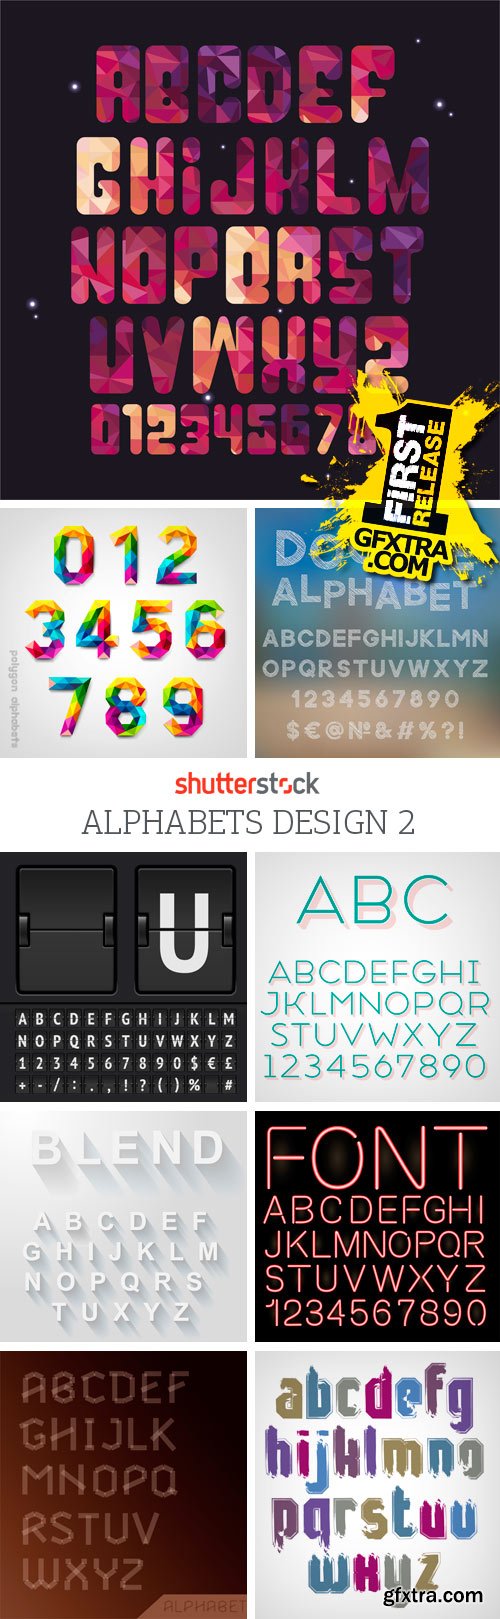 Amazing SS - Alphabets Design 2, 25xEPS